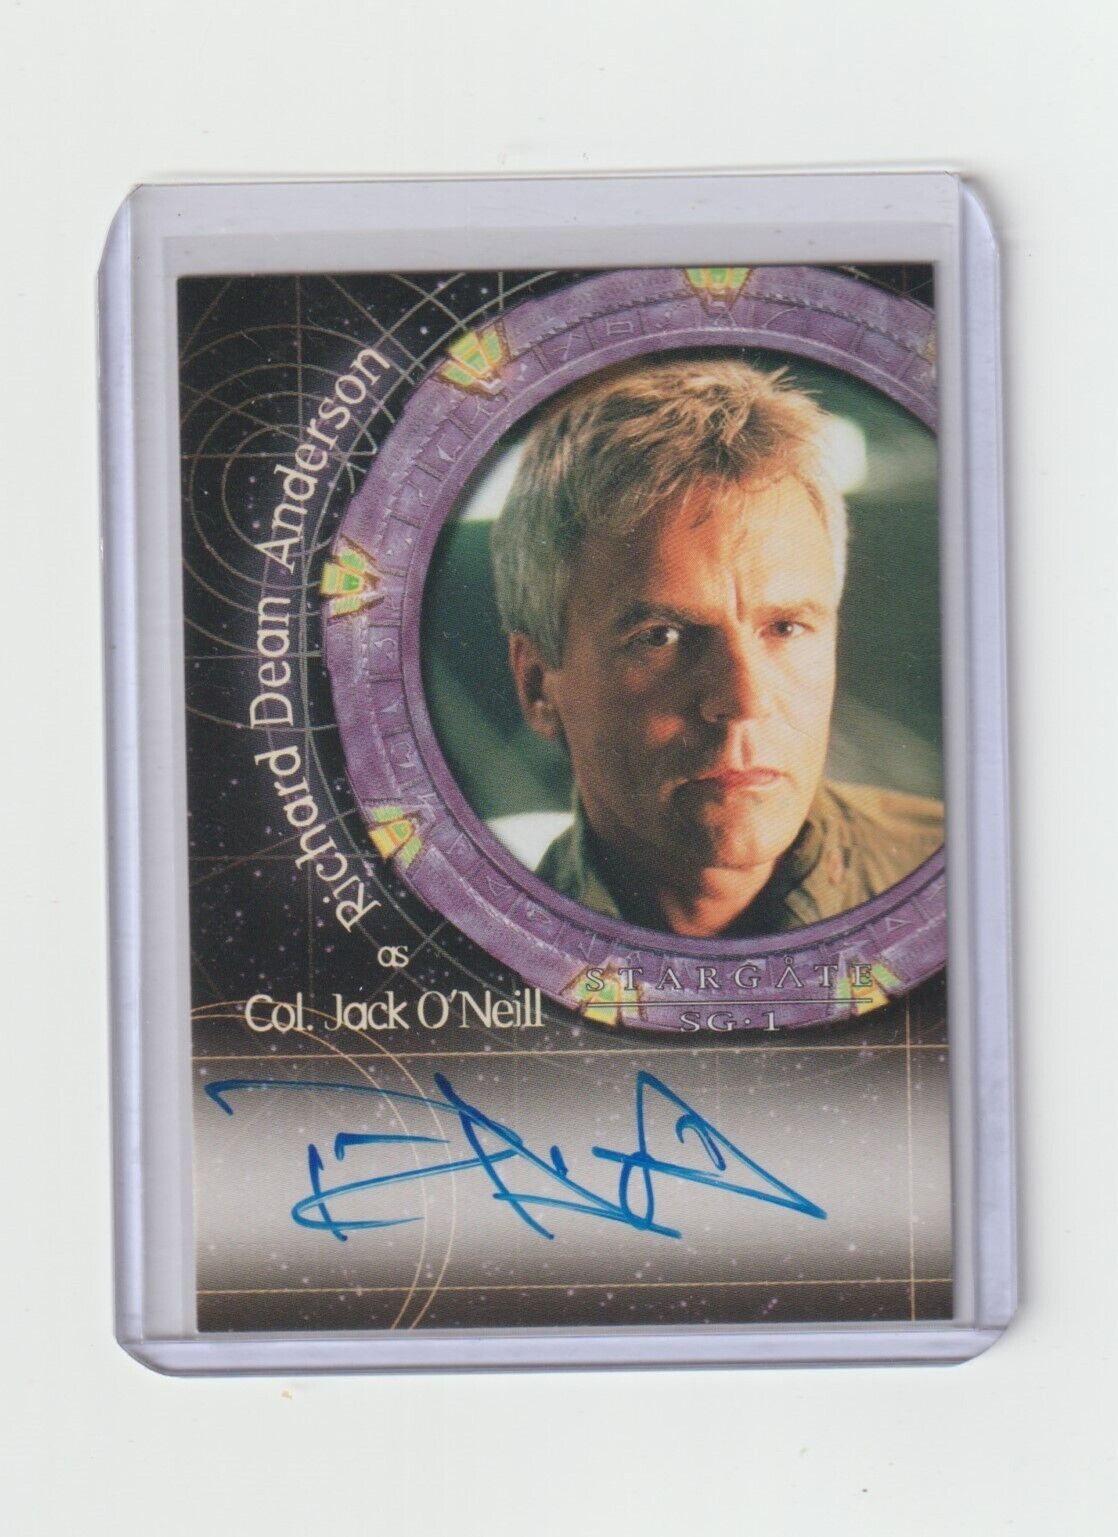 2000 Rittenhouse Stargate SG-1 Richard Dean Anderson Auto Autograph